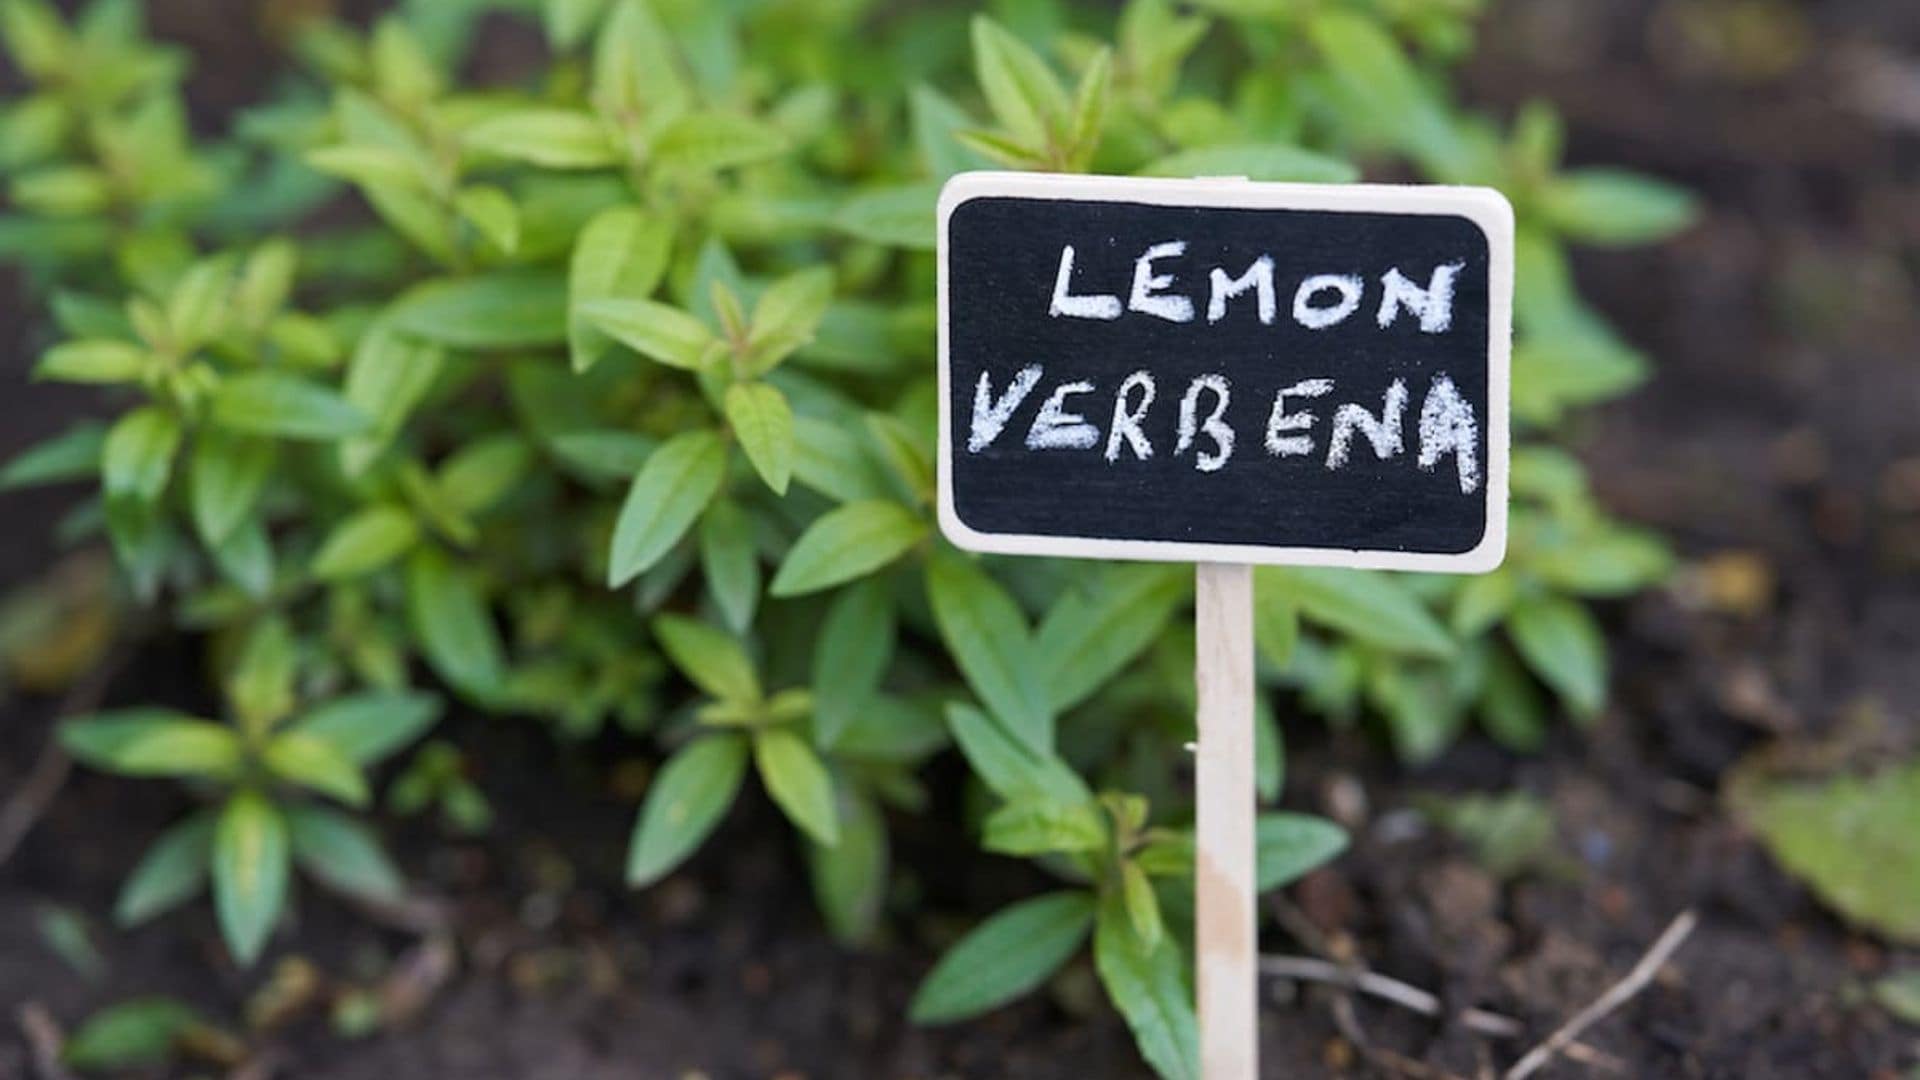 Lemon verbena: Top potential benefits